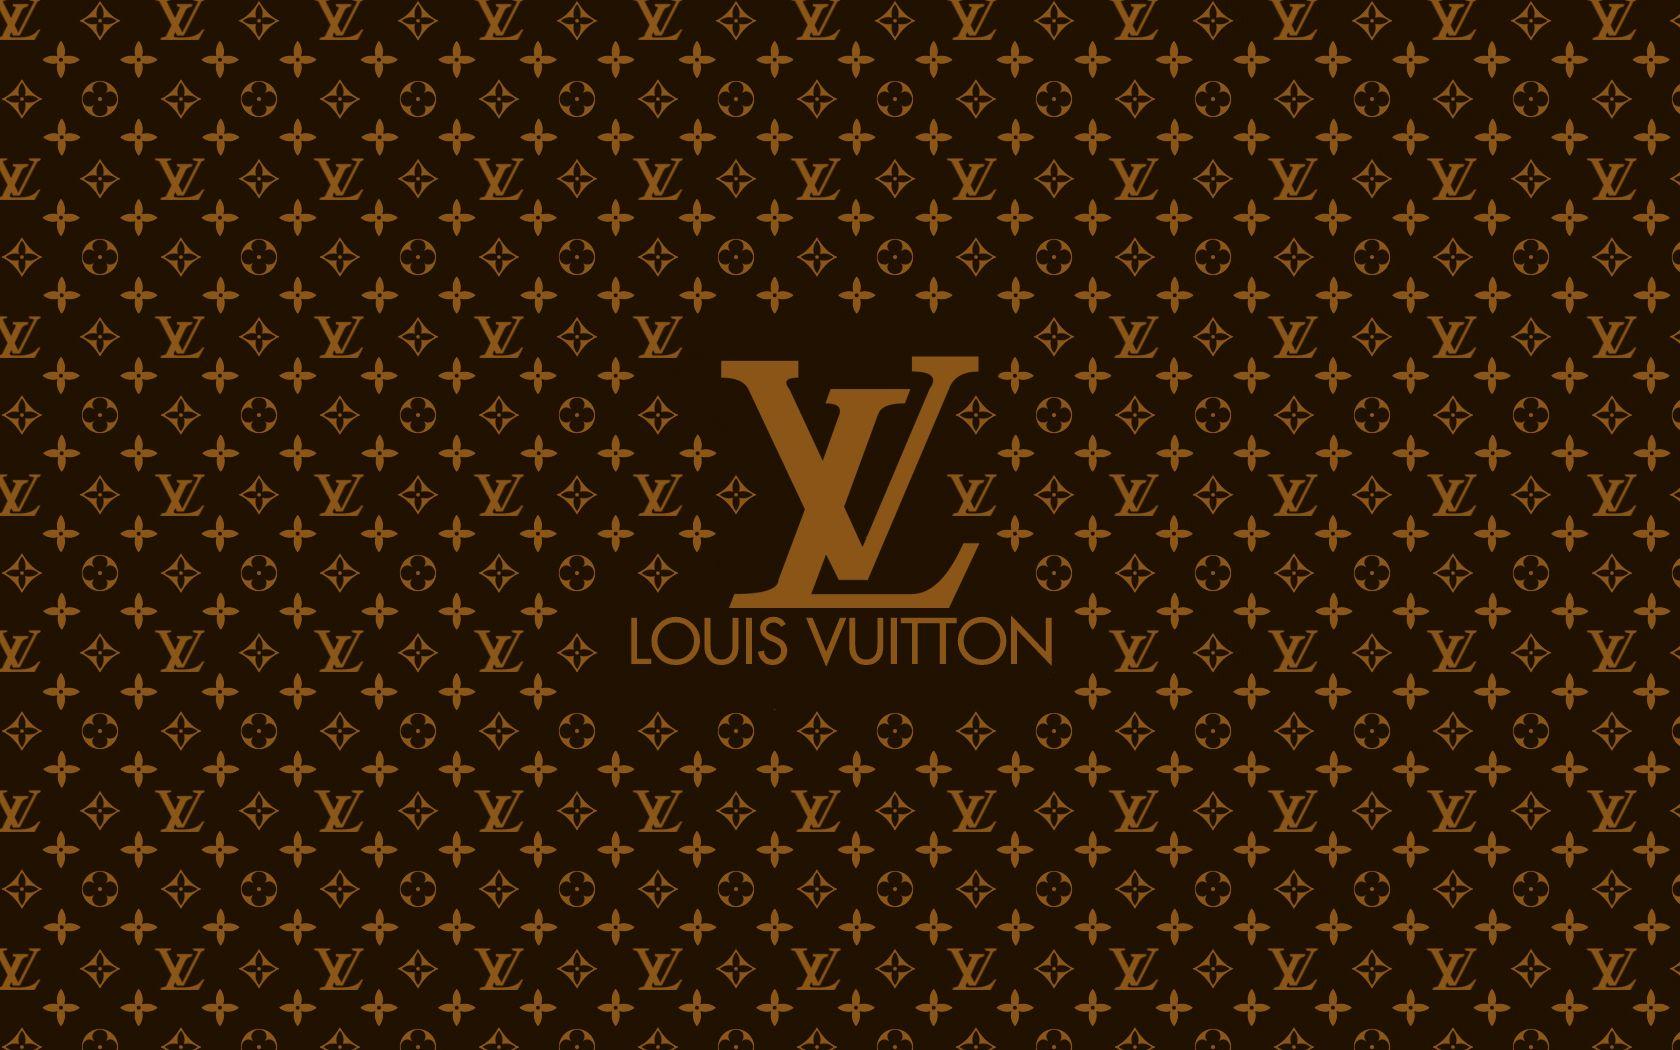 Louis Vuitton Image HD Wallpapers